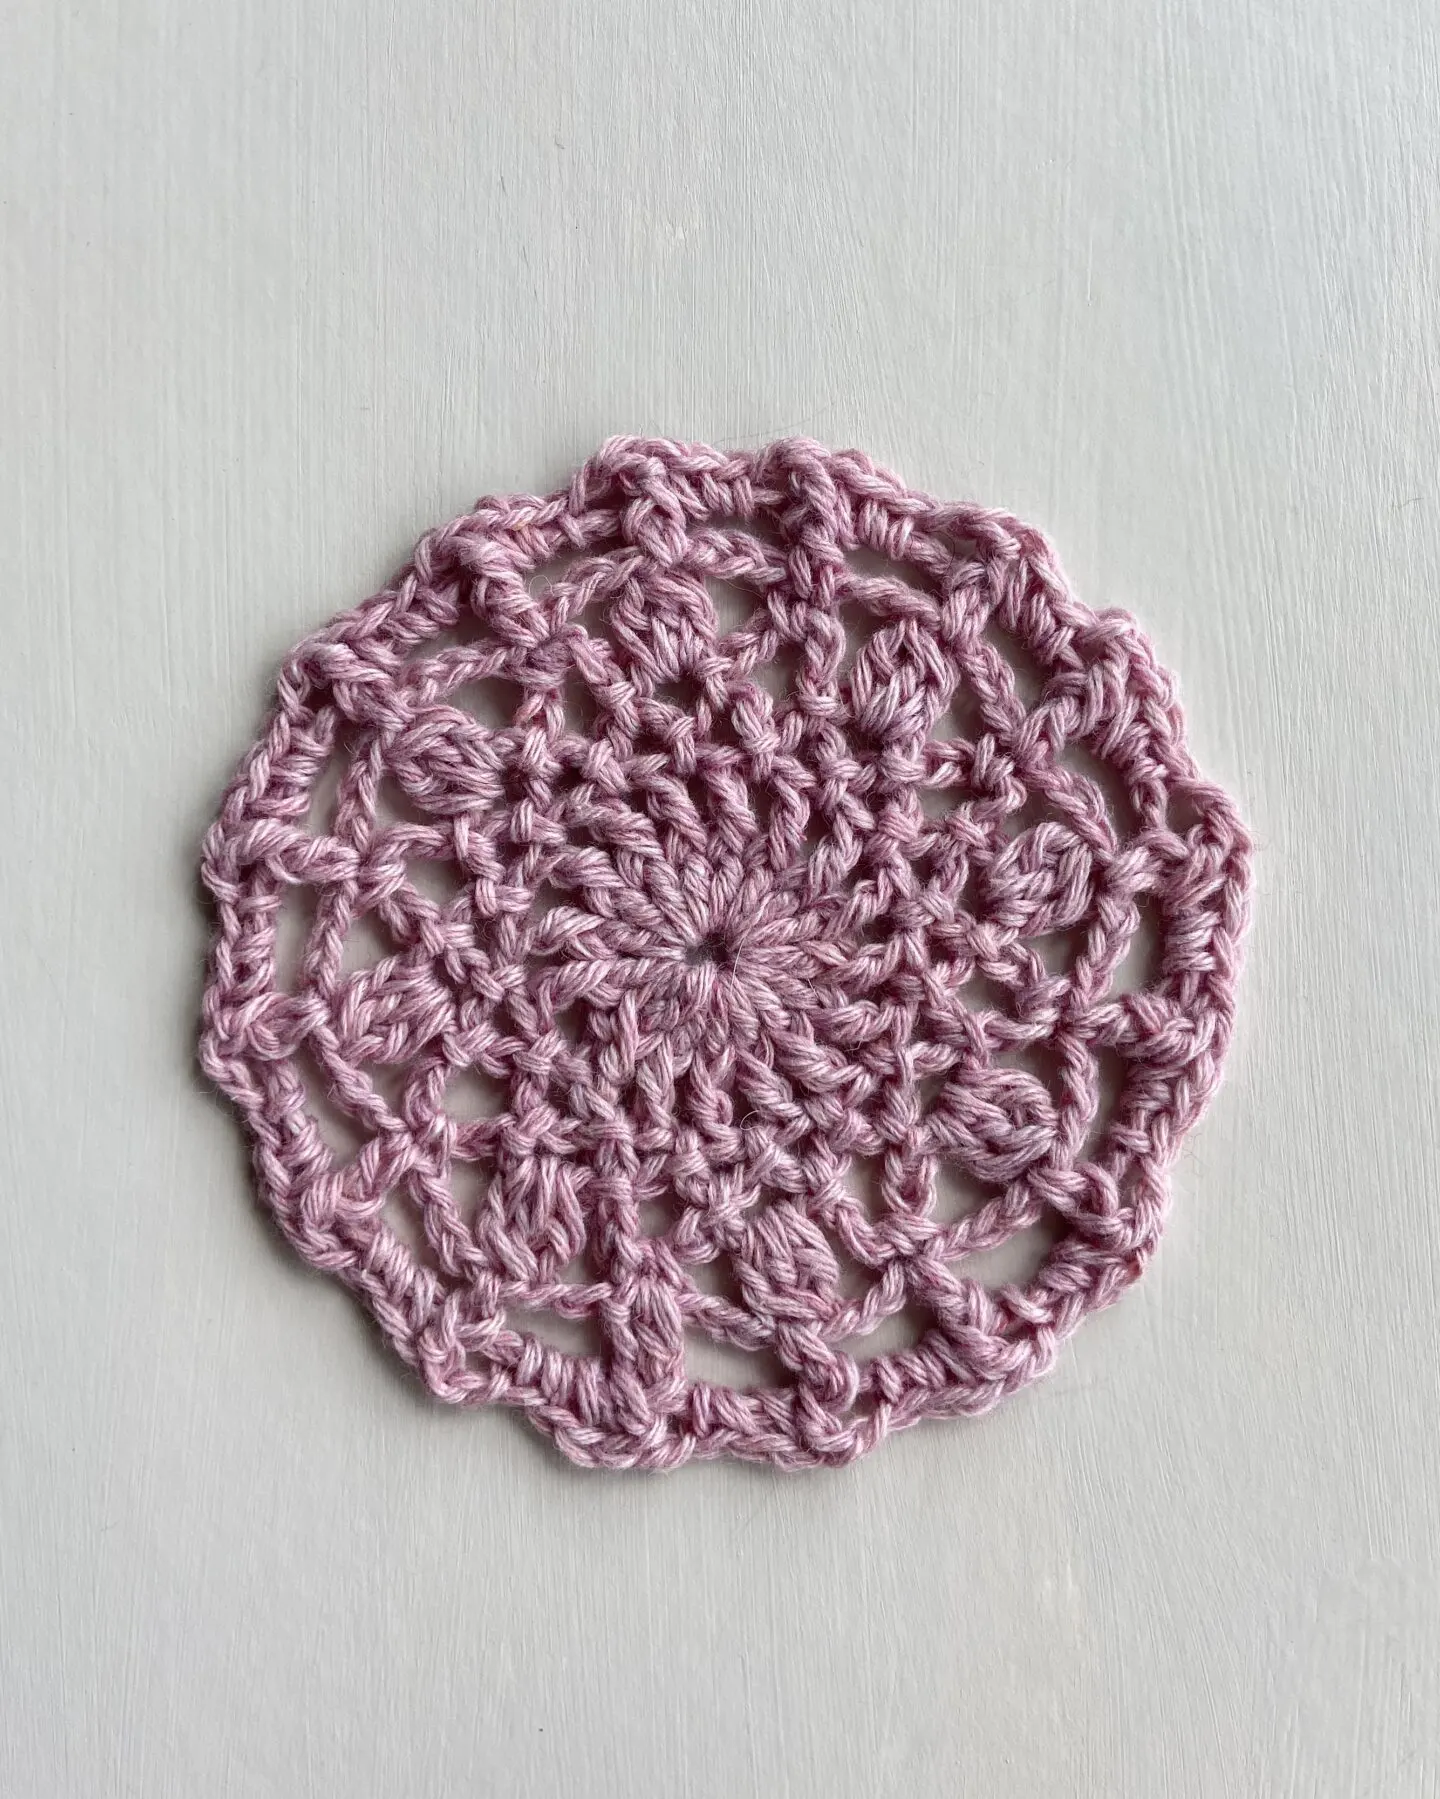 Lace Crochet Coaster Pattern 1.